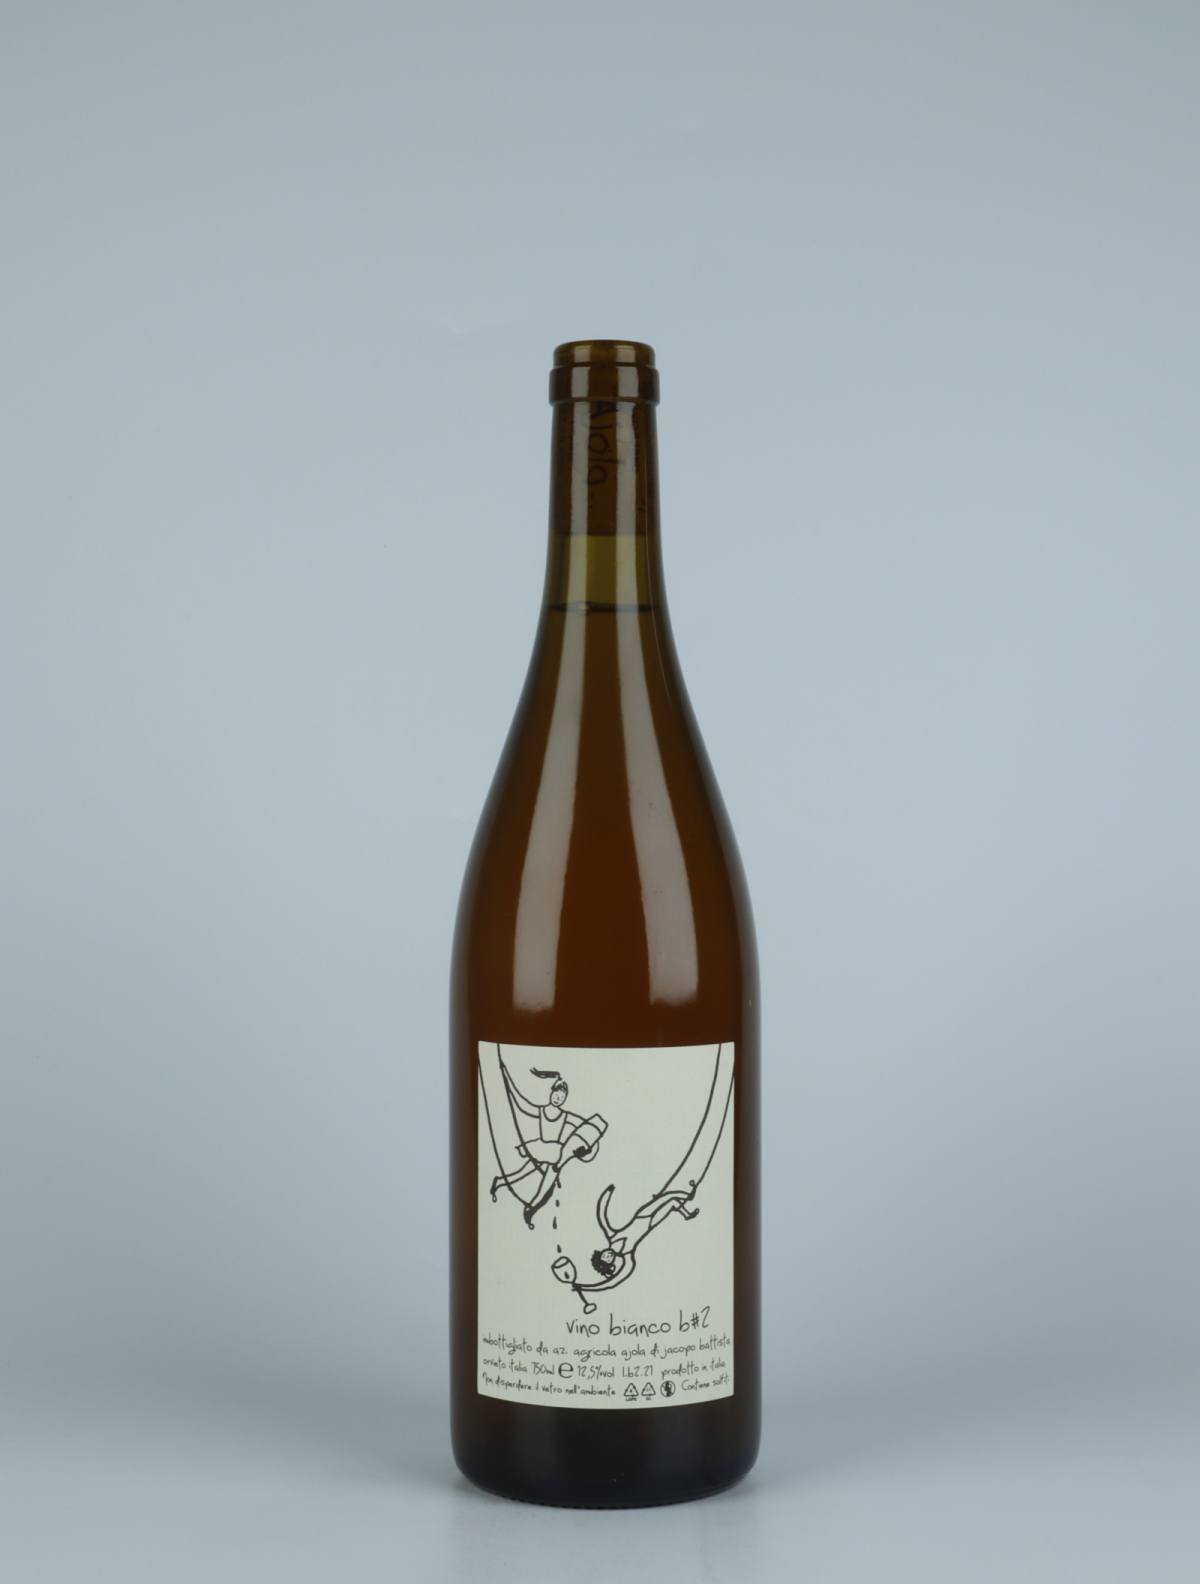 En flaske 2021 Vino Bianco #2 Orange vin fra Ajola, Umbrien i Italien